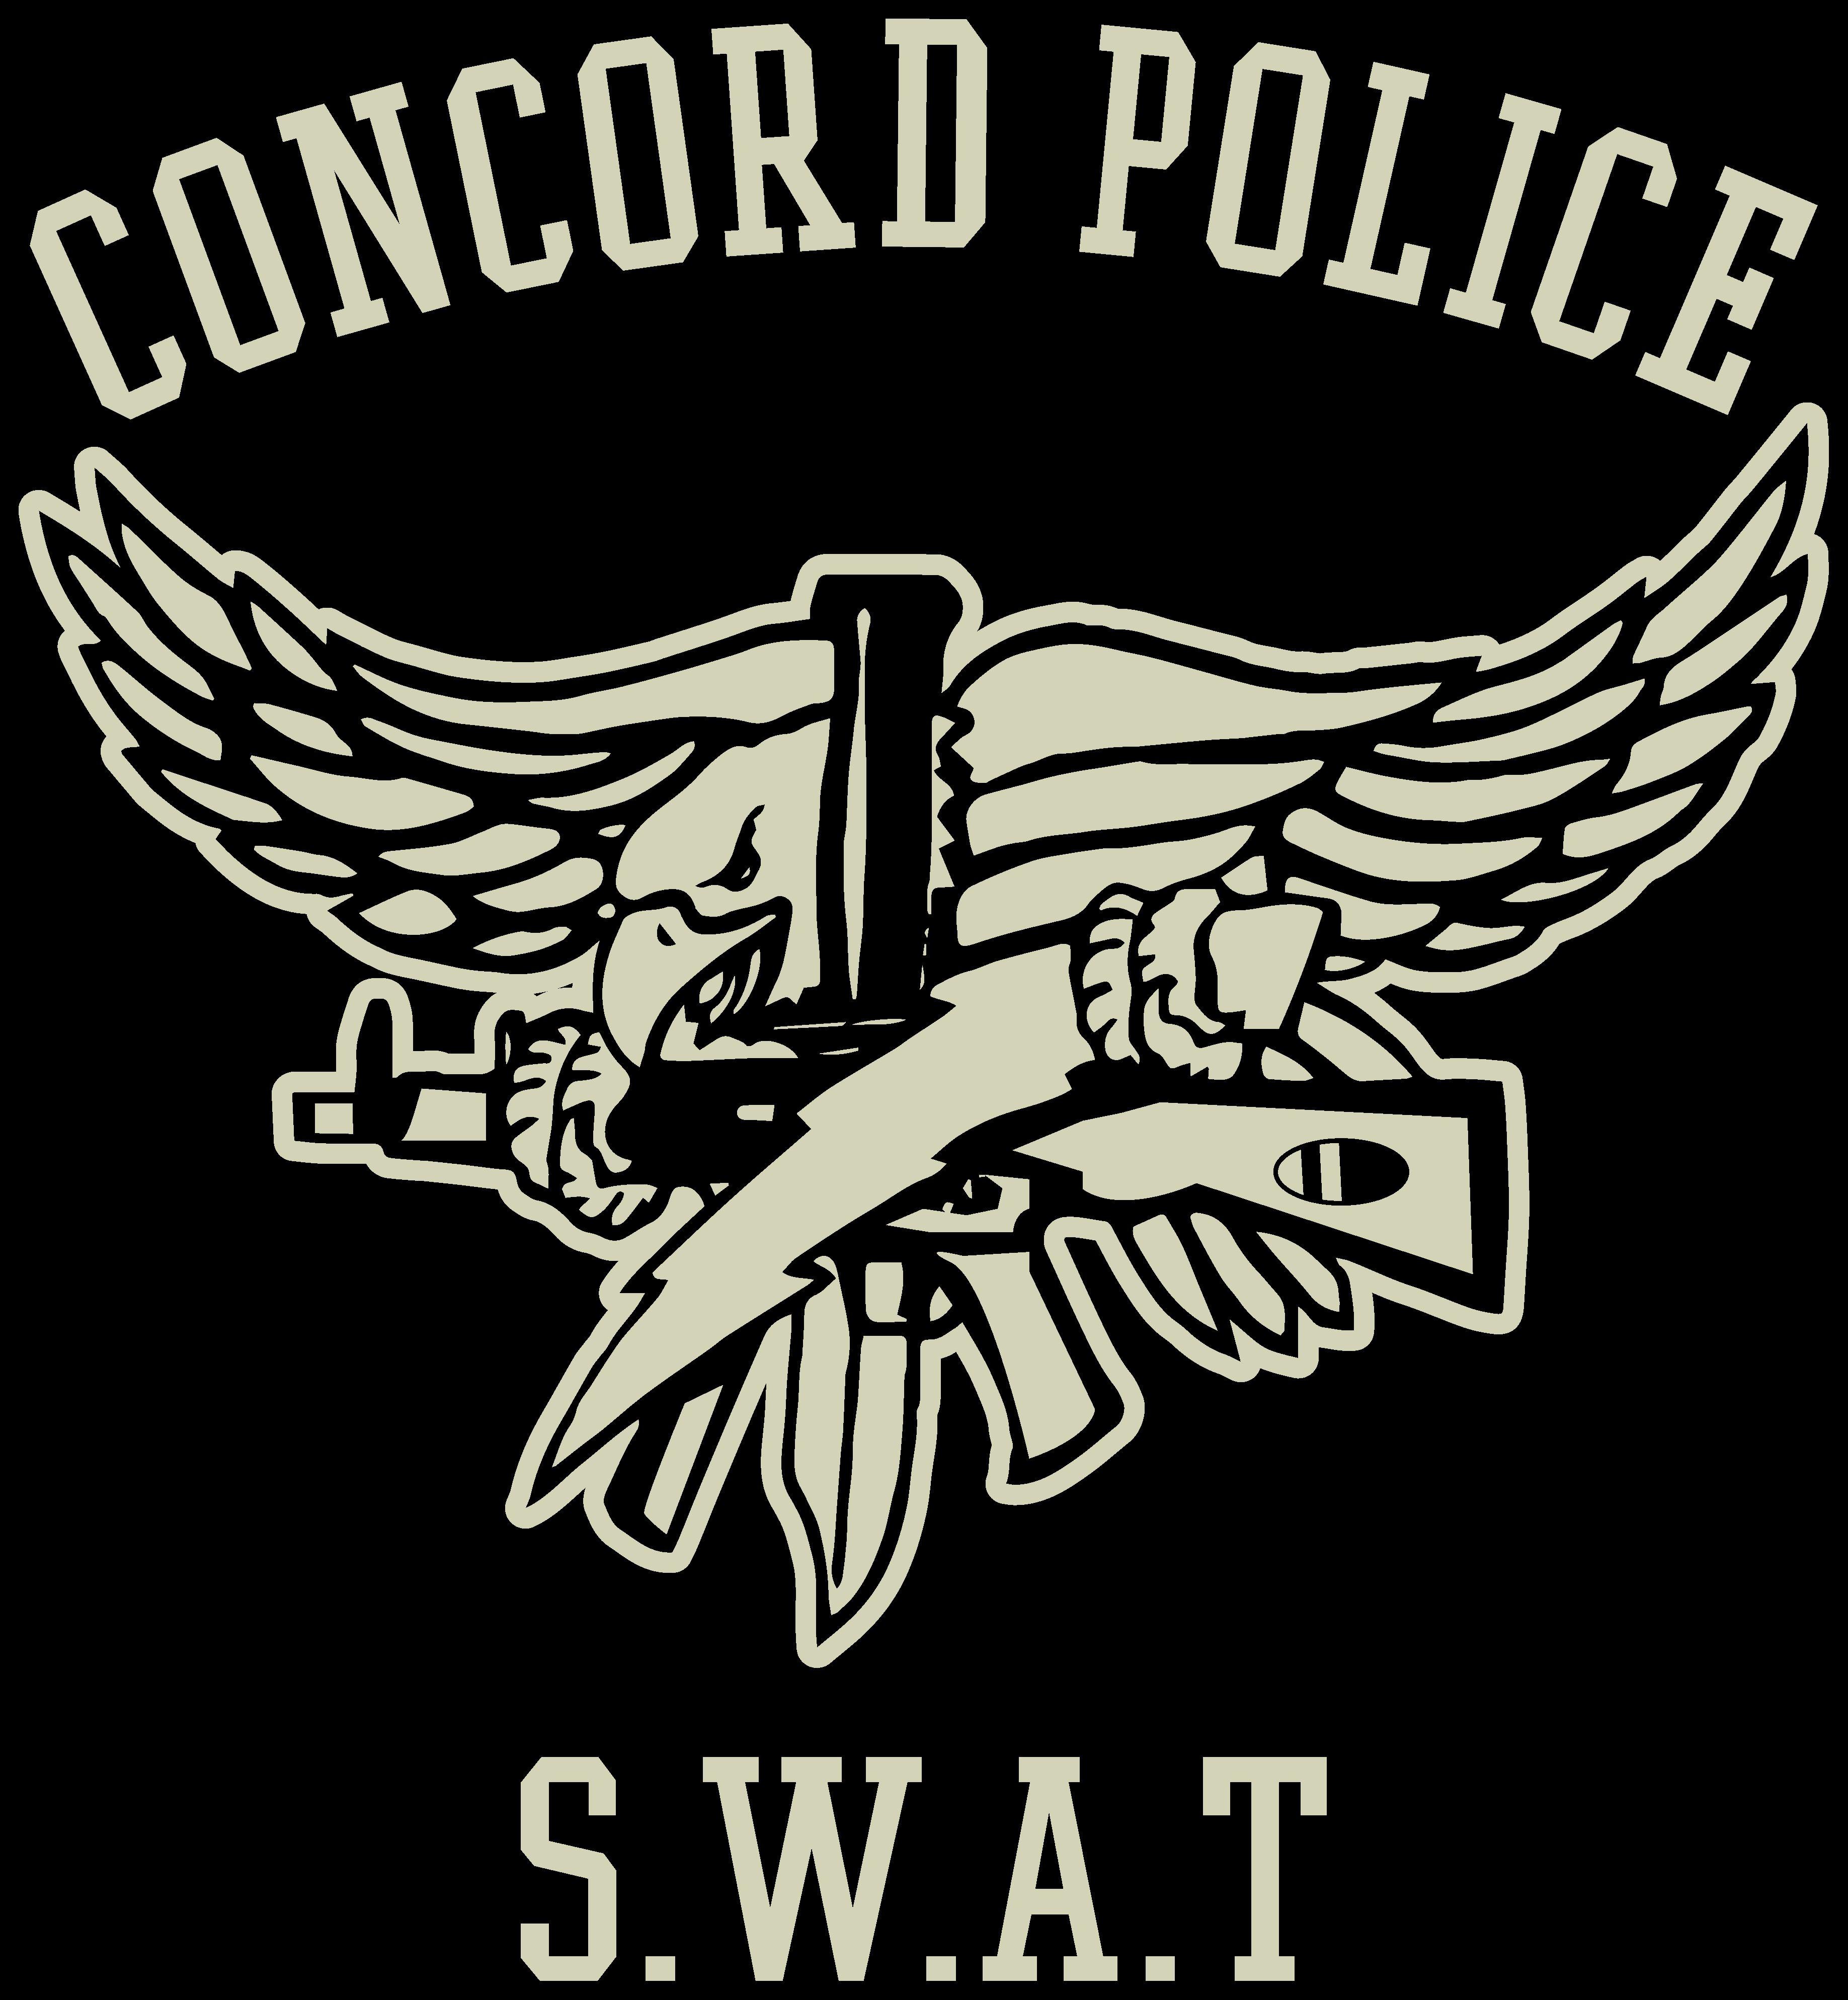 Swat Logo - CONCORD SWAT LOGO Imagewear. Embroidery, Fabric Printing